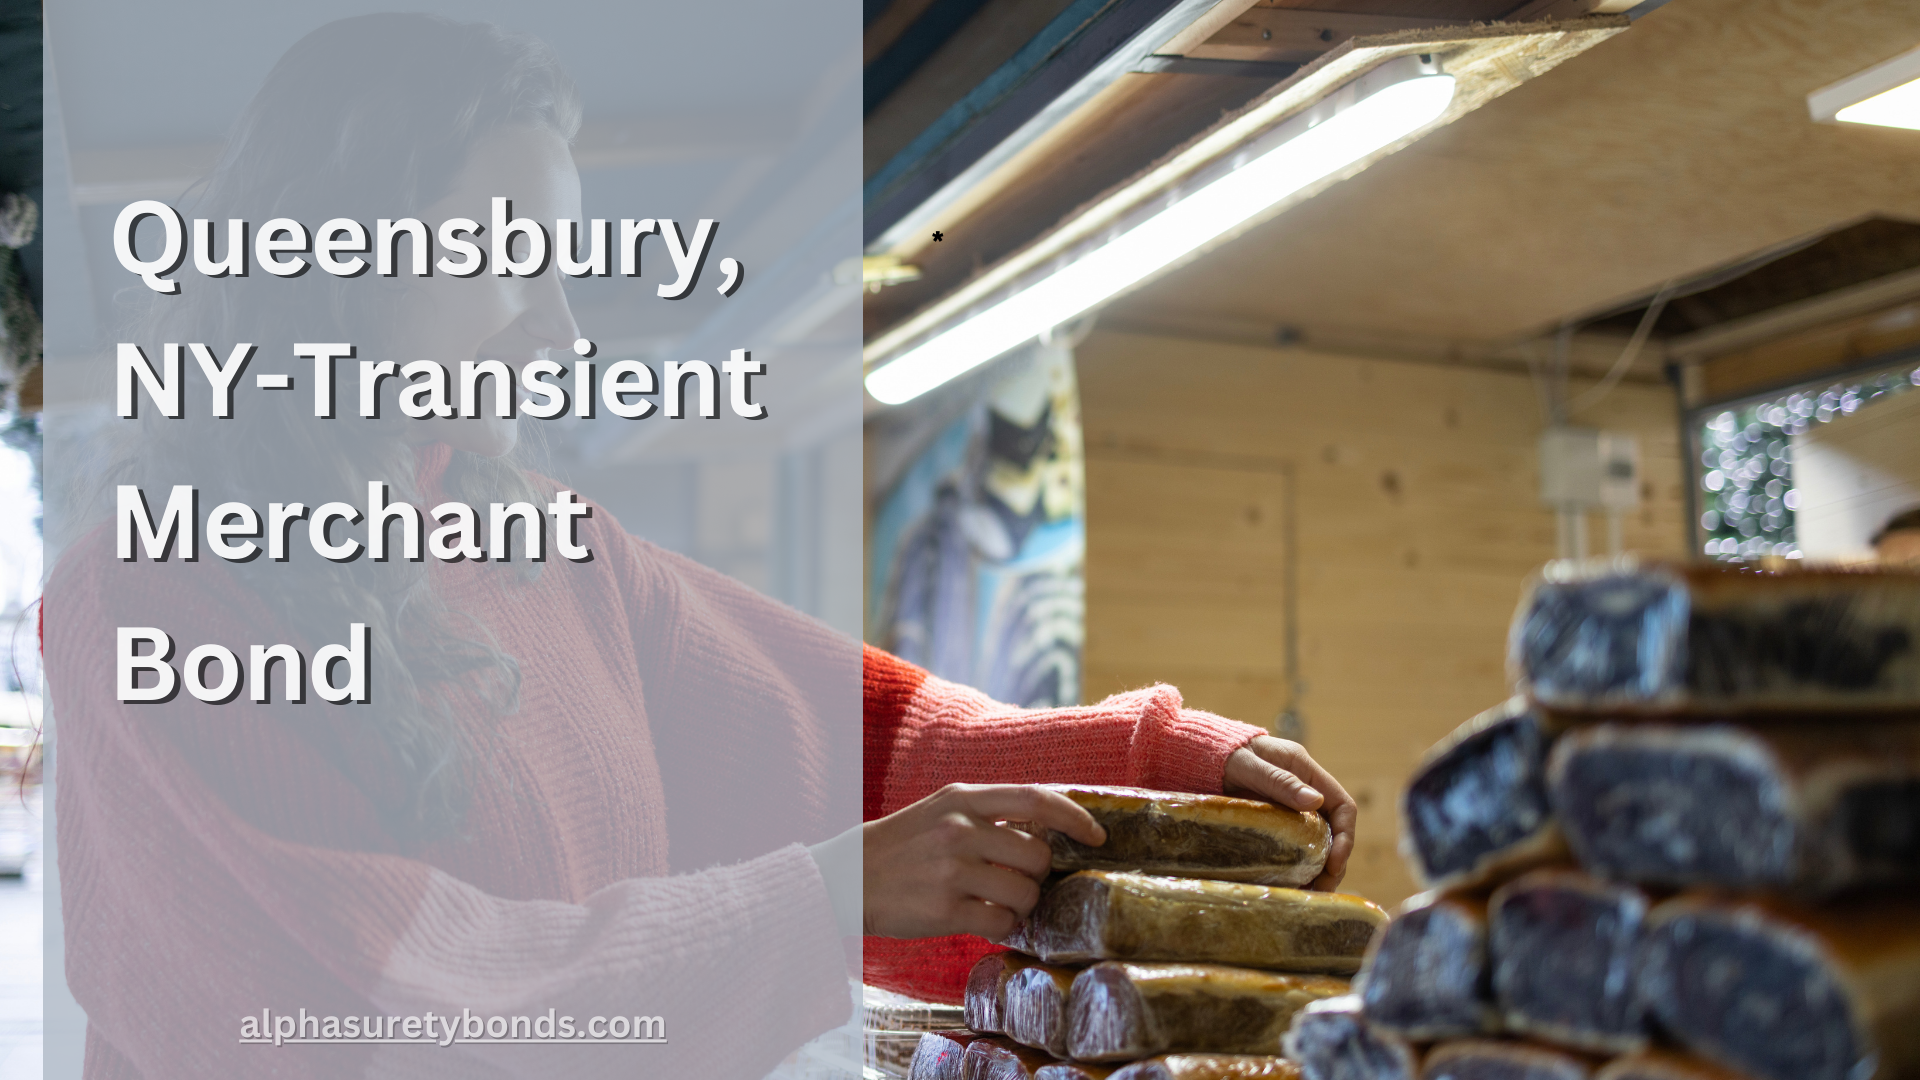 Queensbury, NY-Transient Merchant Bond